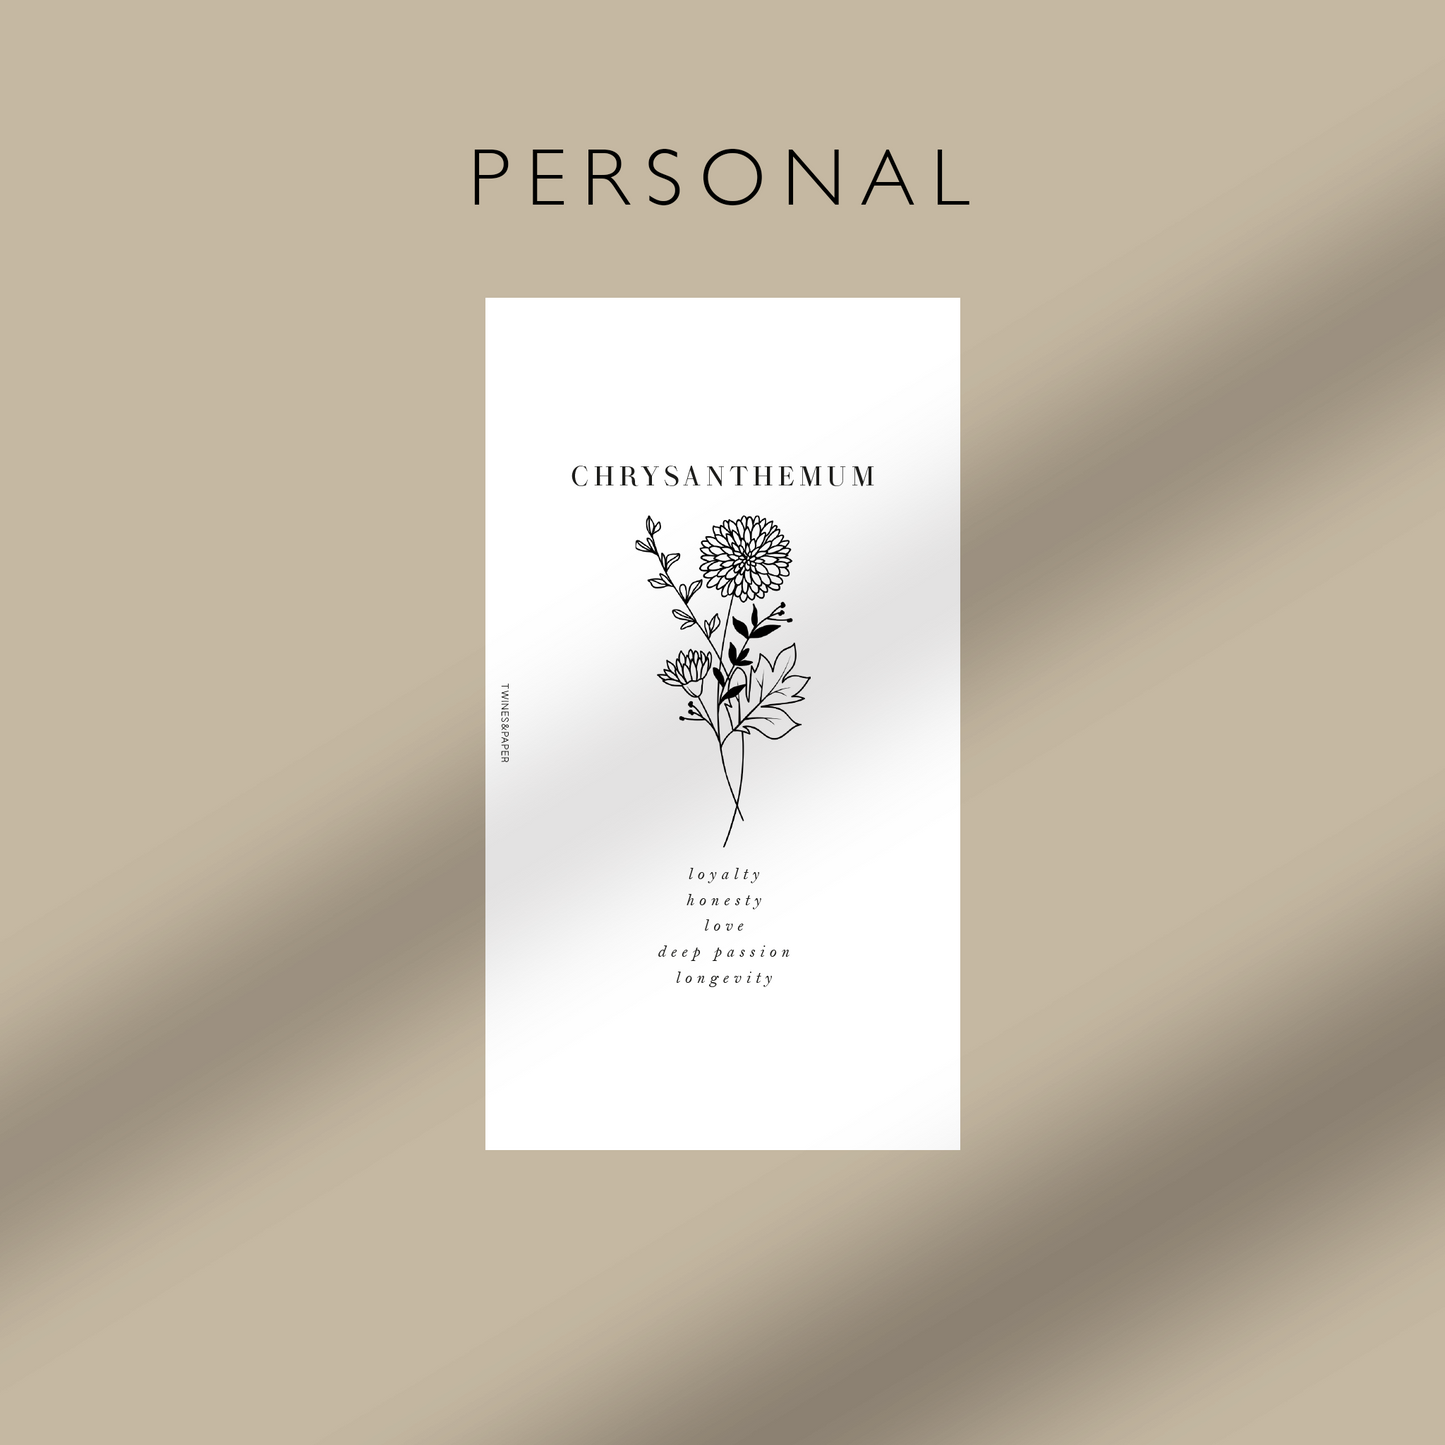 "Chrysanthemum - November" Birth Month Flowers - Printable Dashboards